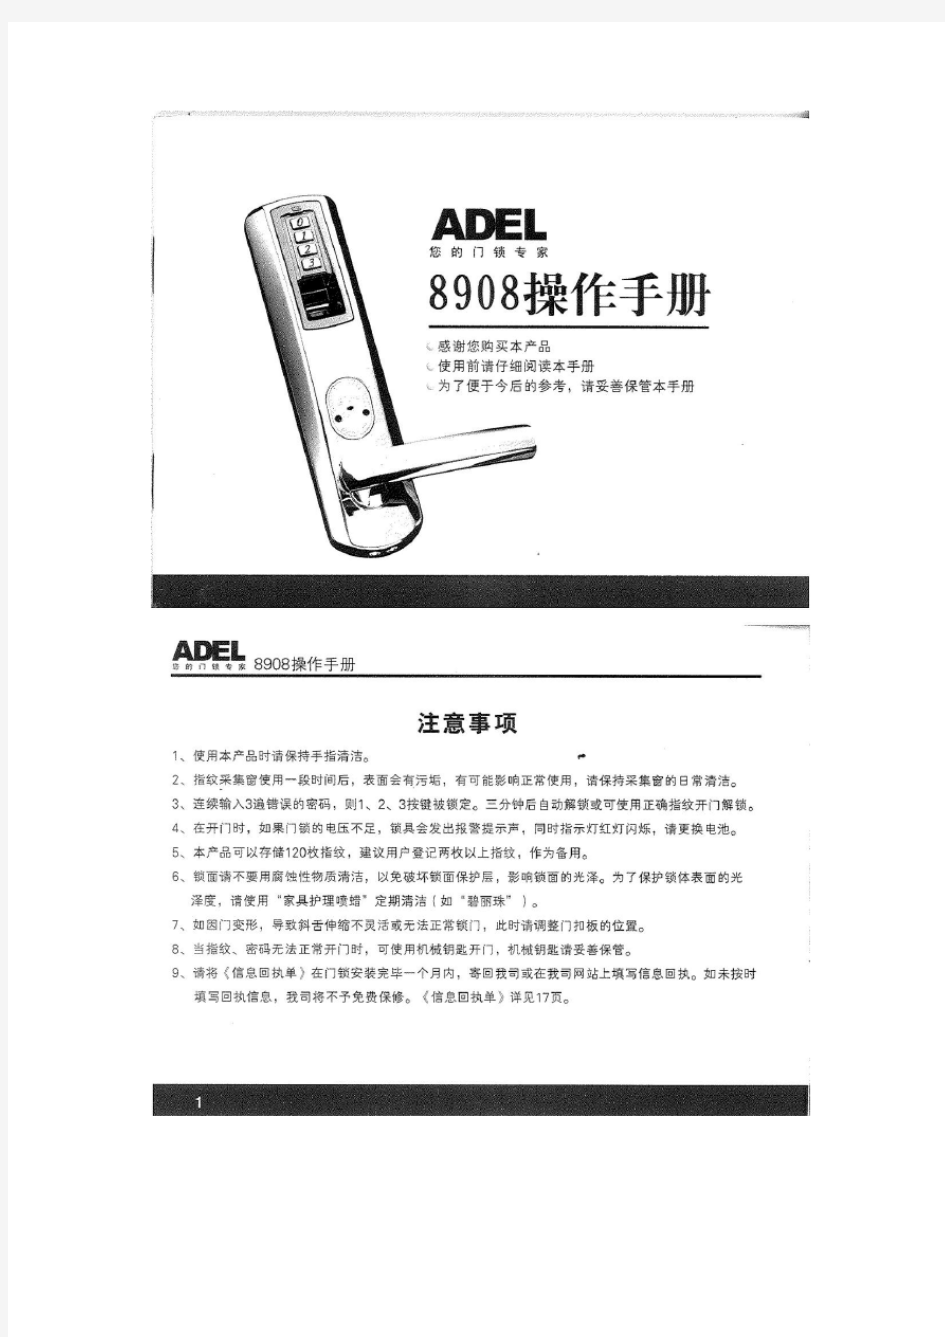 ADEL 8908指纹锁操作手册